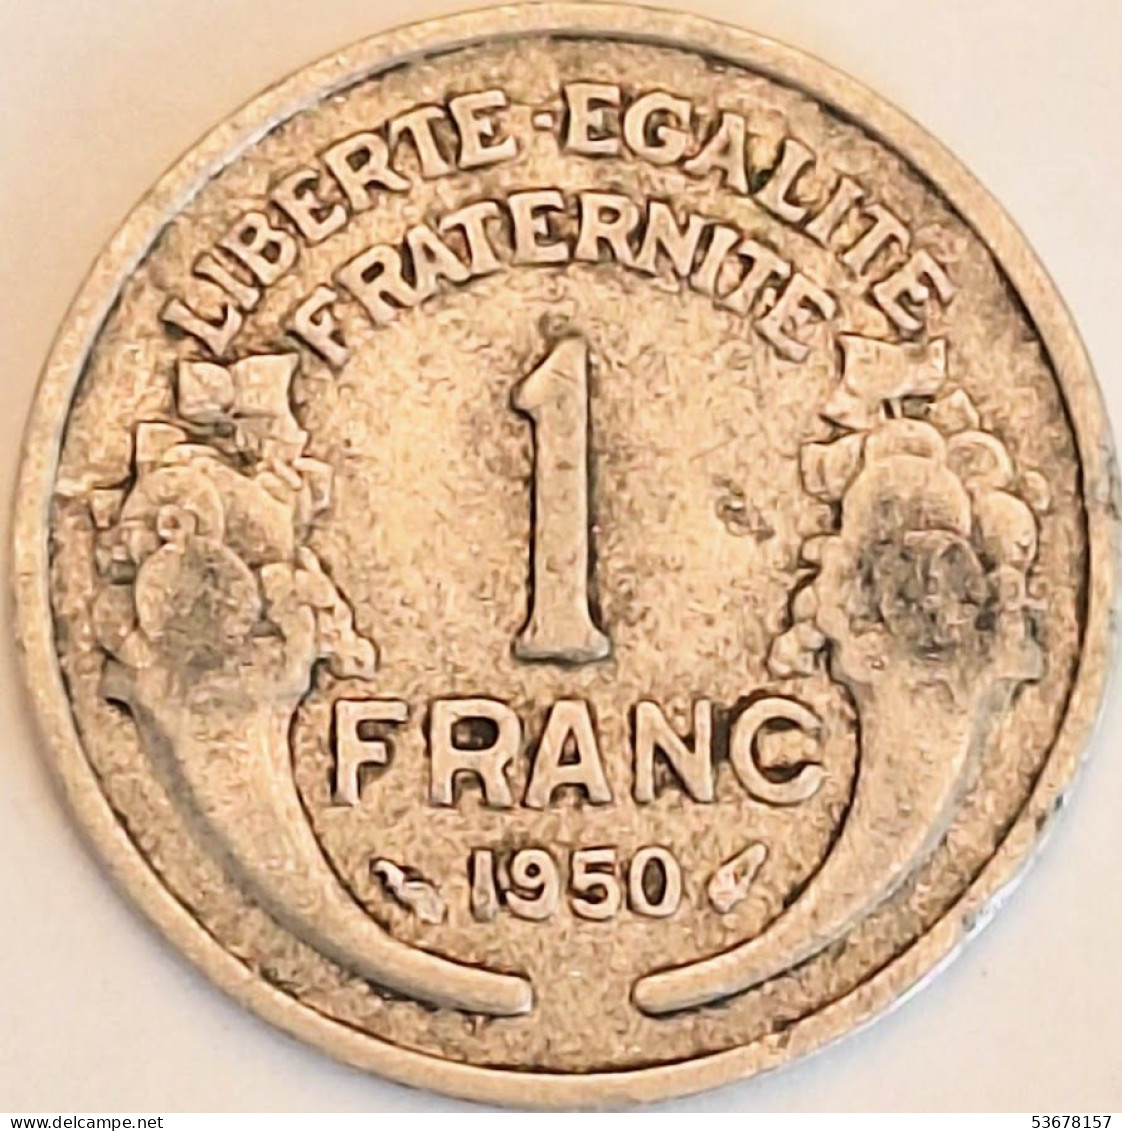 France - Franc 1950, KM# 885a.1 (#4086) - 1 Franc